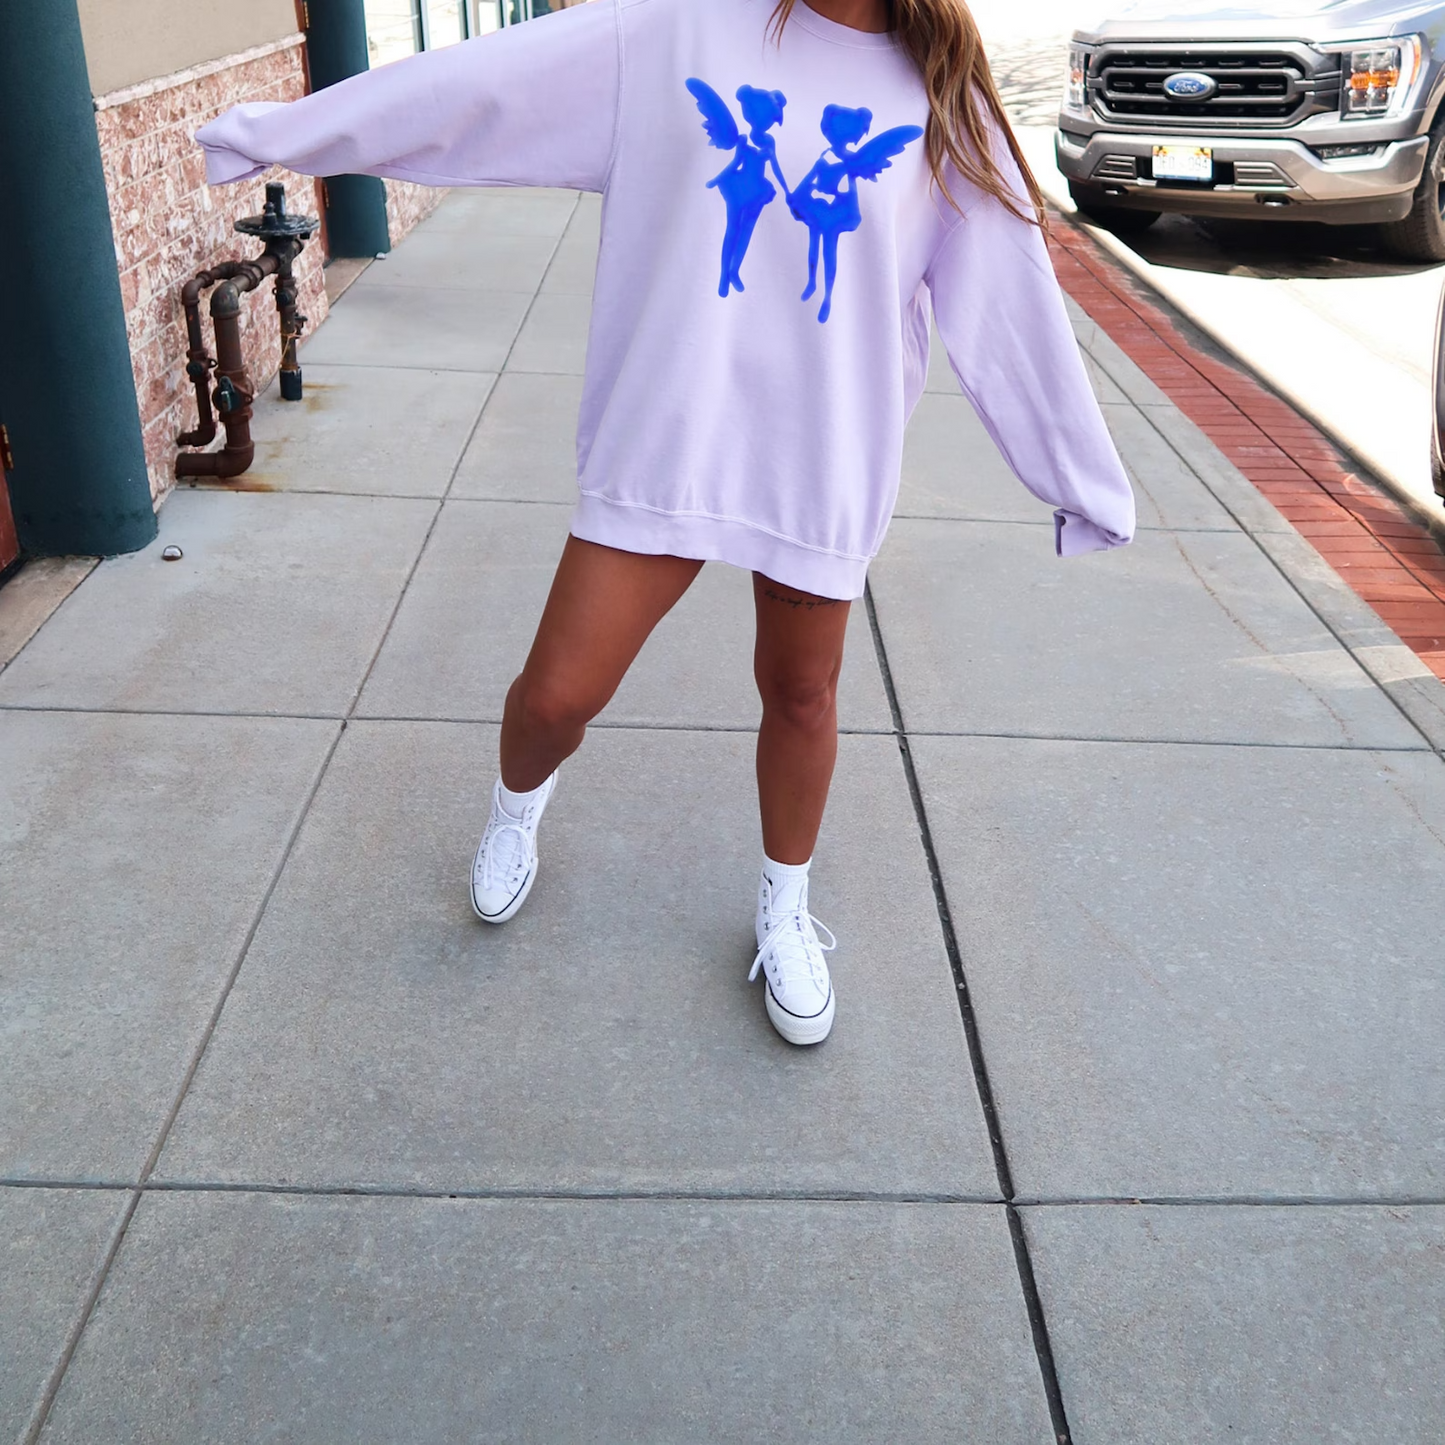 Drake Fairy Sweatshirt